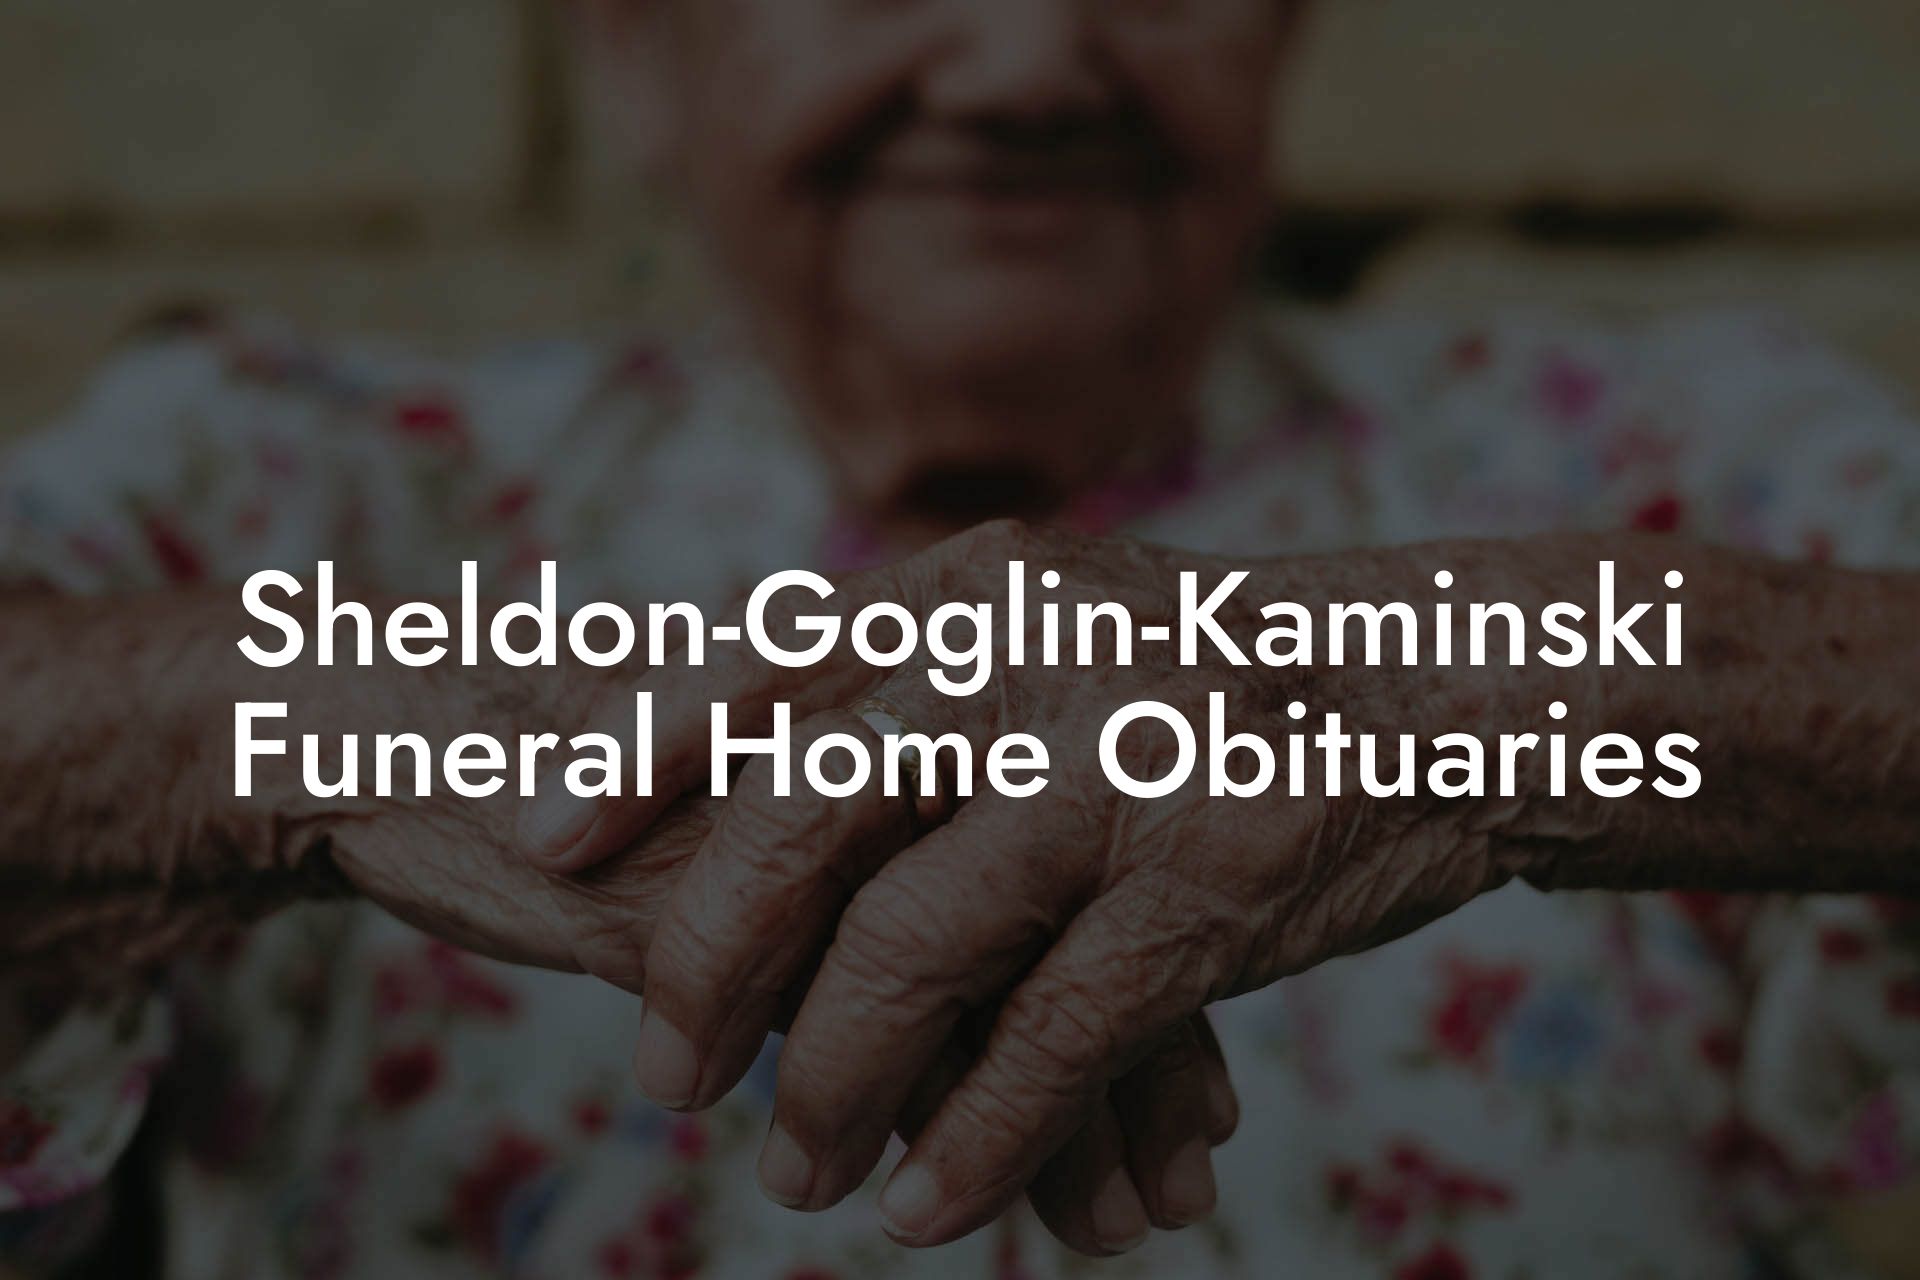 Sheldon-Goglin-Kaminski Funeral Home Obituaries